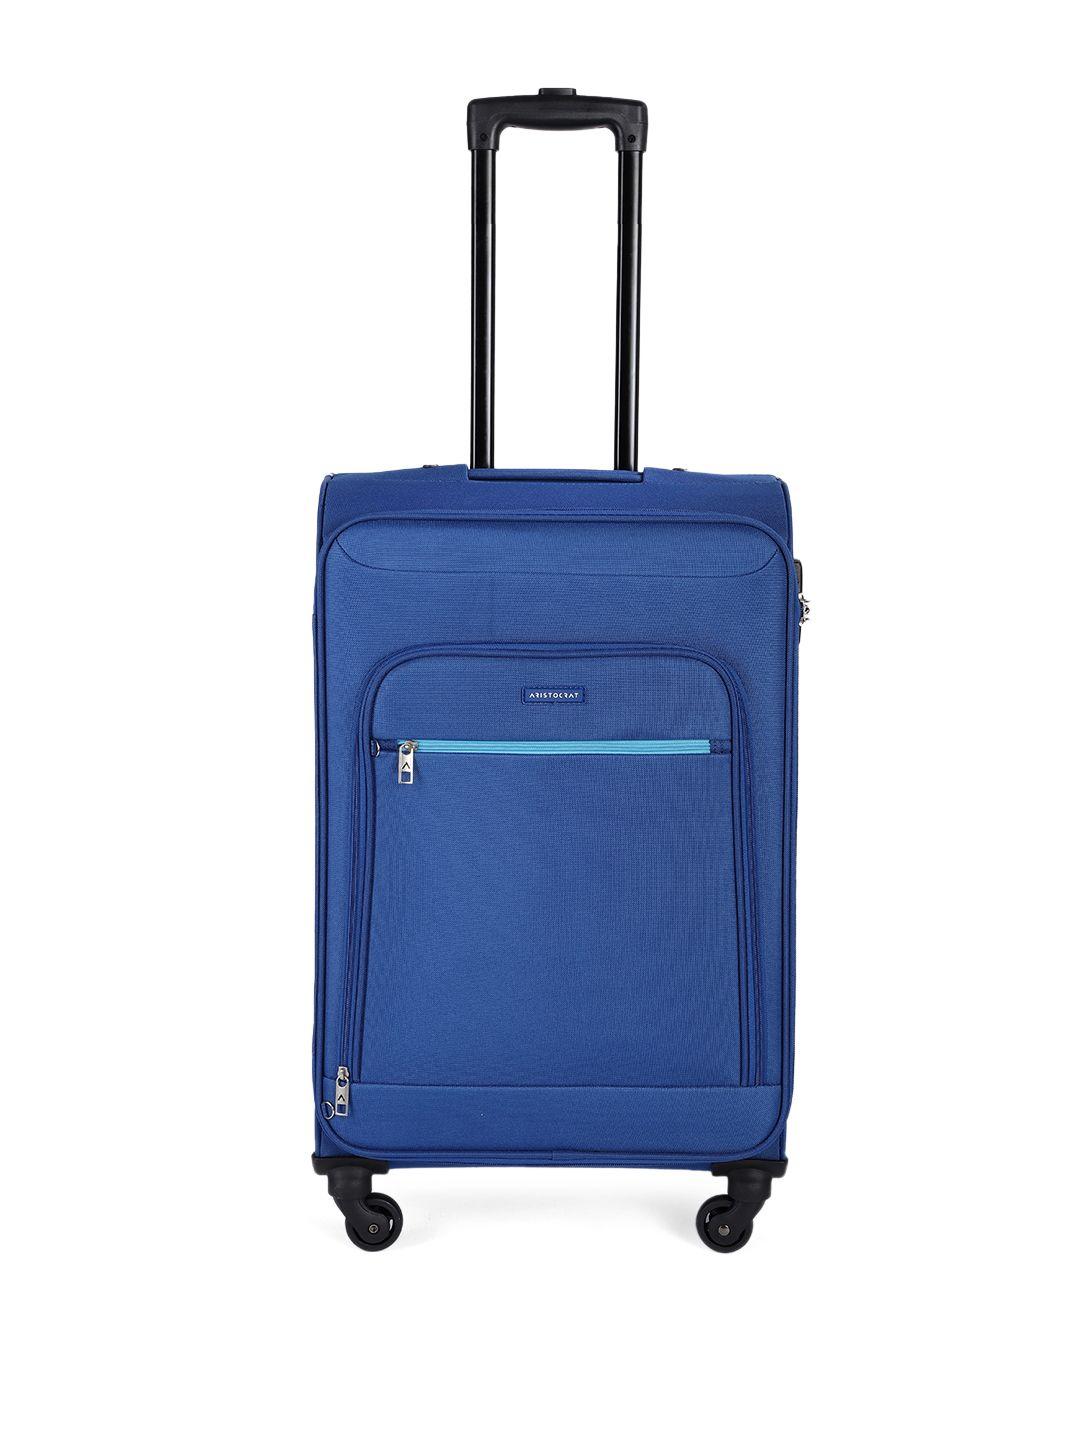 aristocrat solid nile exp strolly medium luggage trolley suitcase - 64 cm